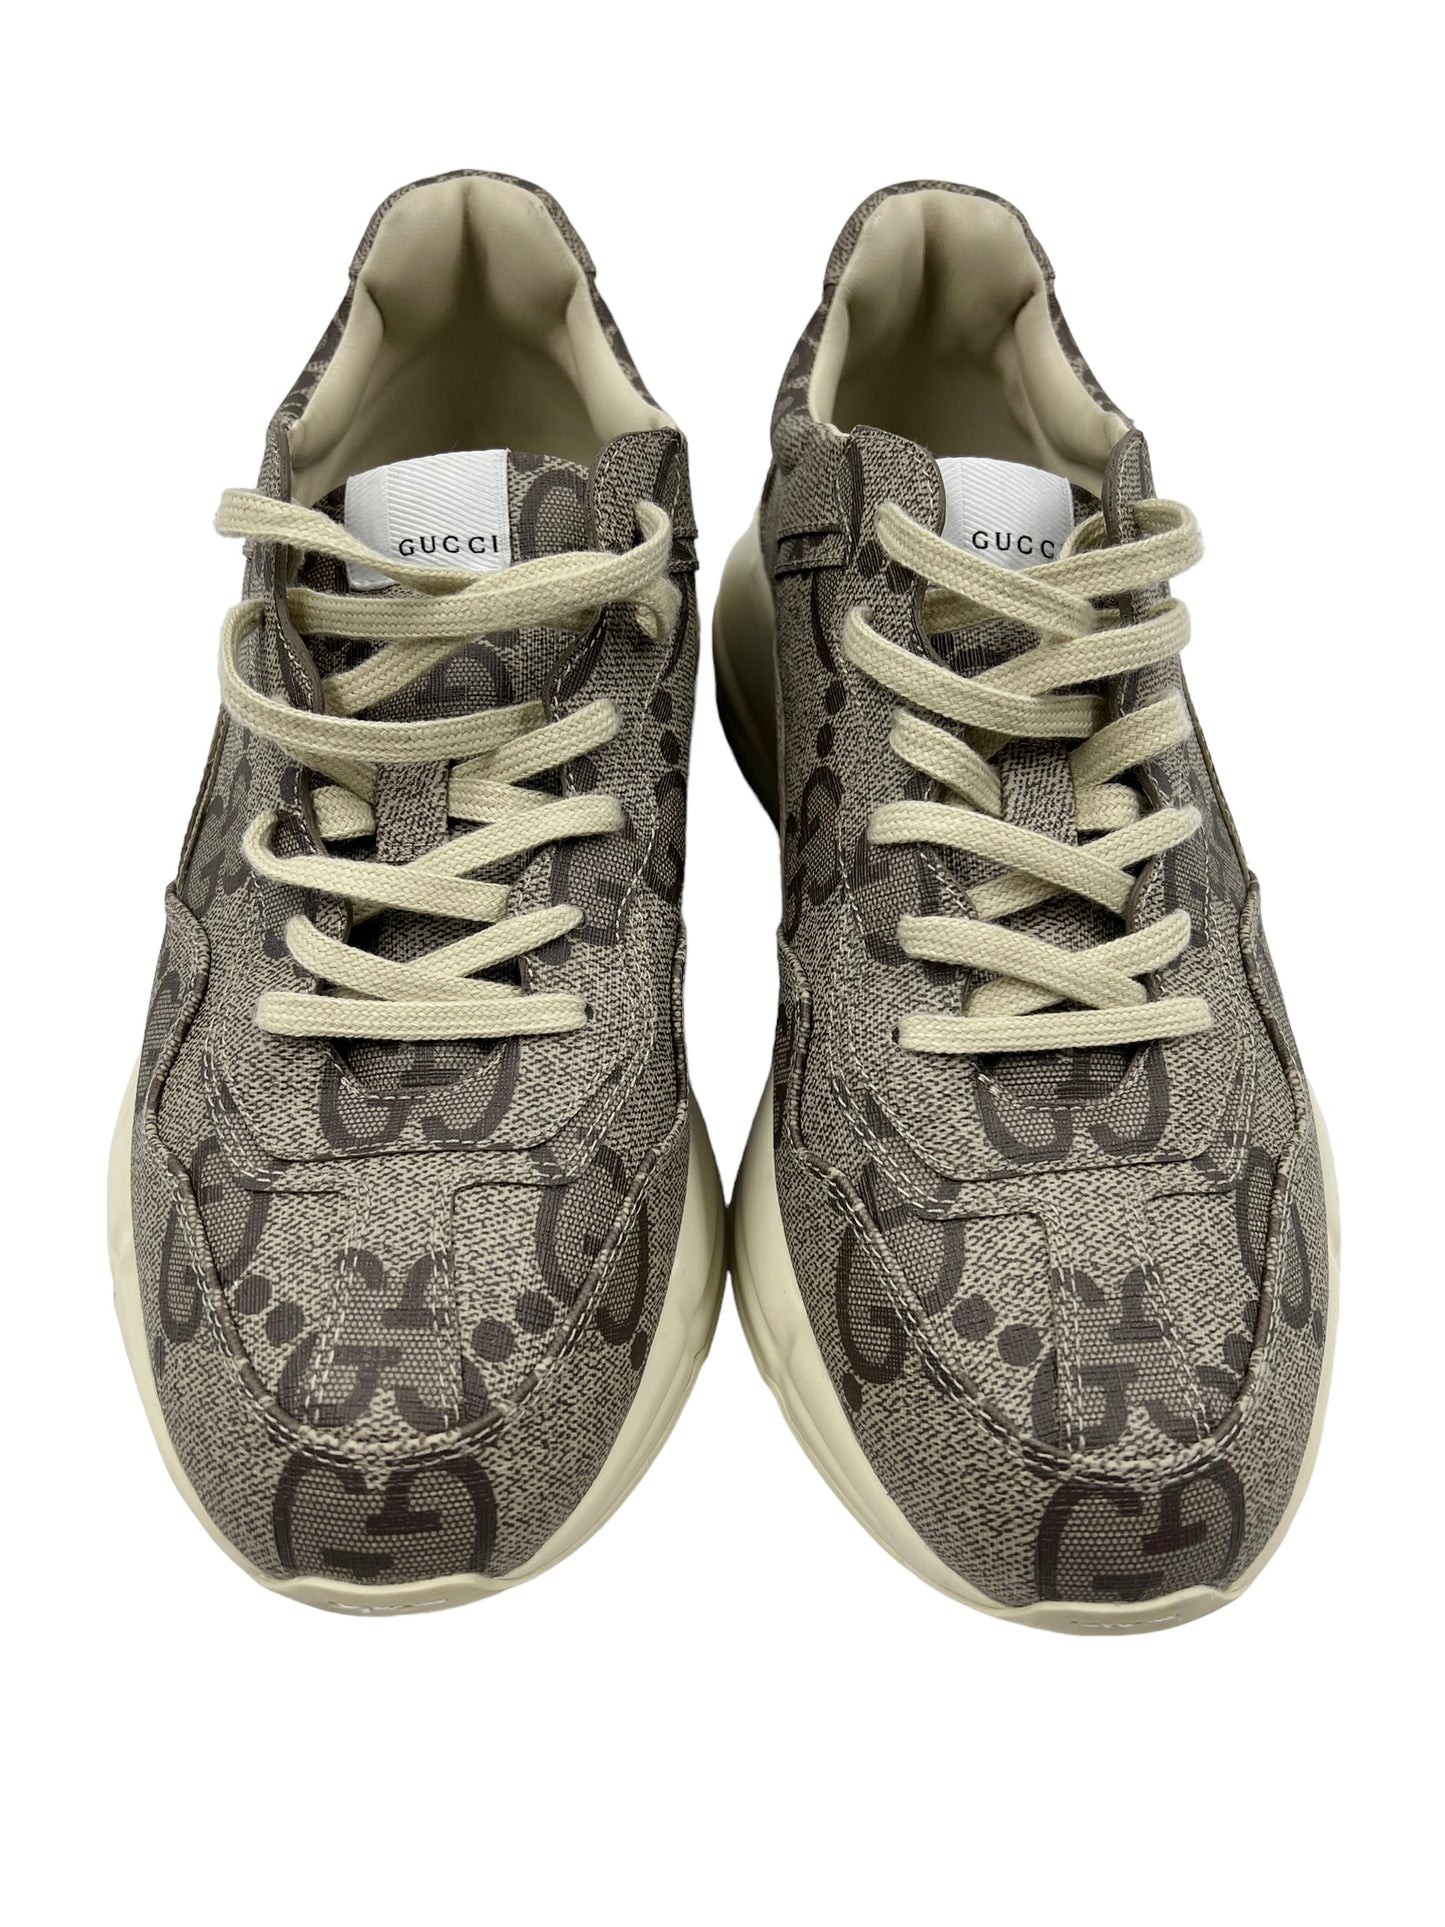 Gucci Men's Size 45 Maxi GG Rhyton Low Top Sneakers